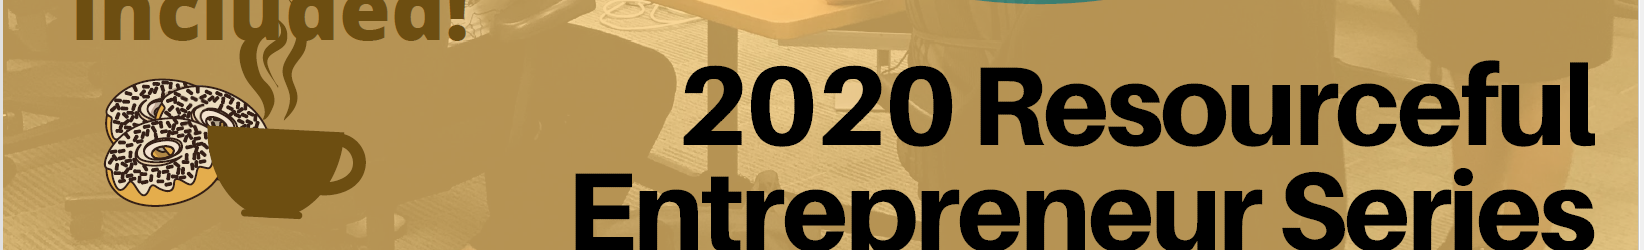 2020 Resourceful Entrepreneur Series